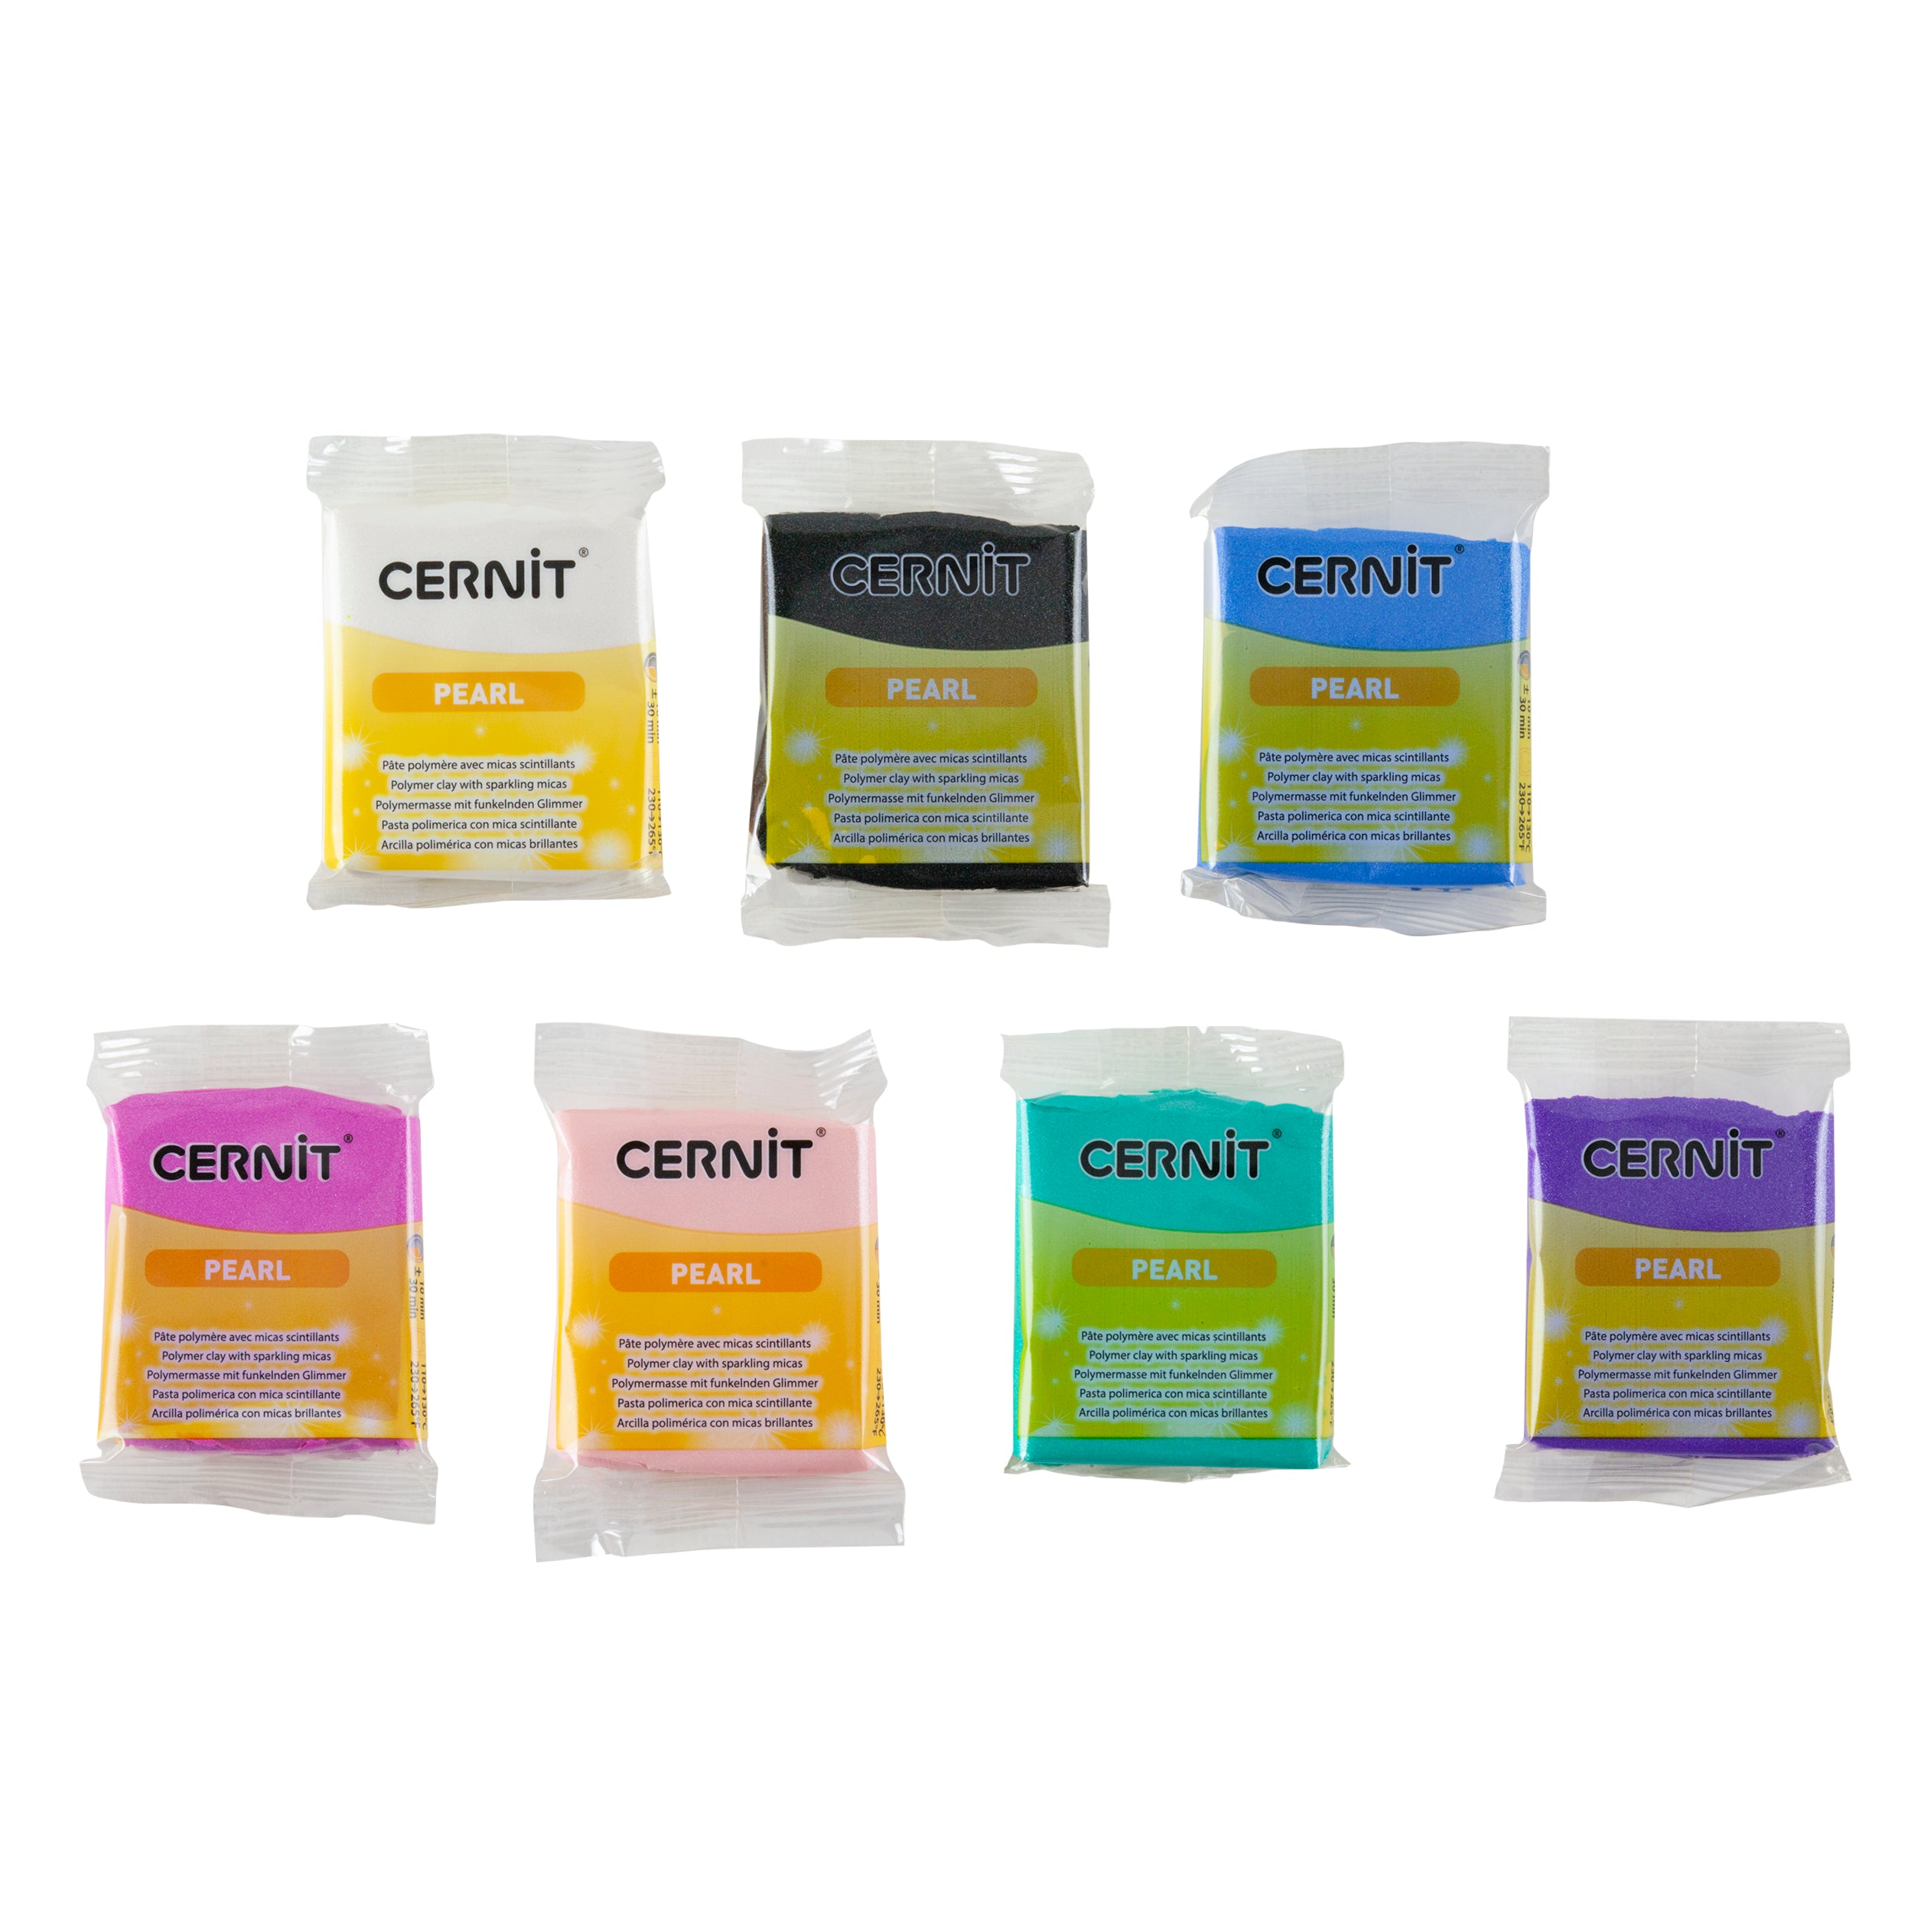 Cernit Translucent Polymer Clay - Night Glow 2oz (56g) block